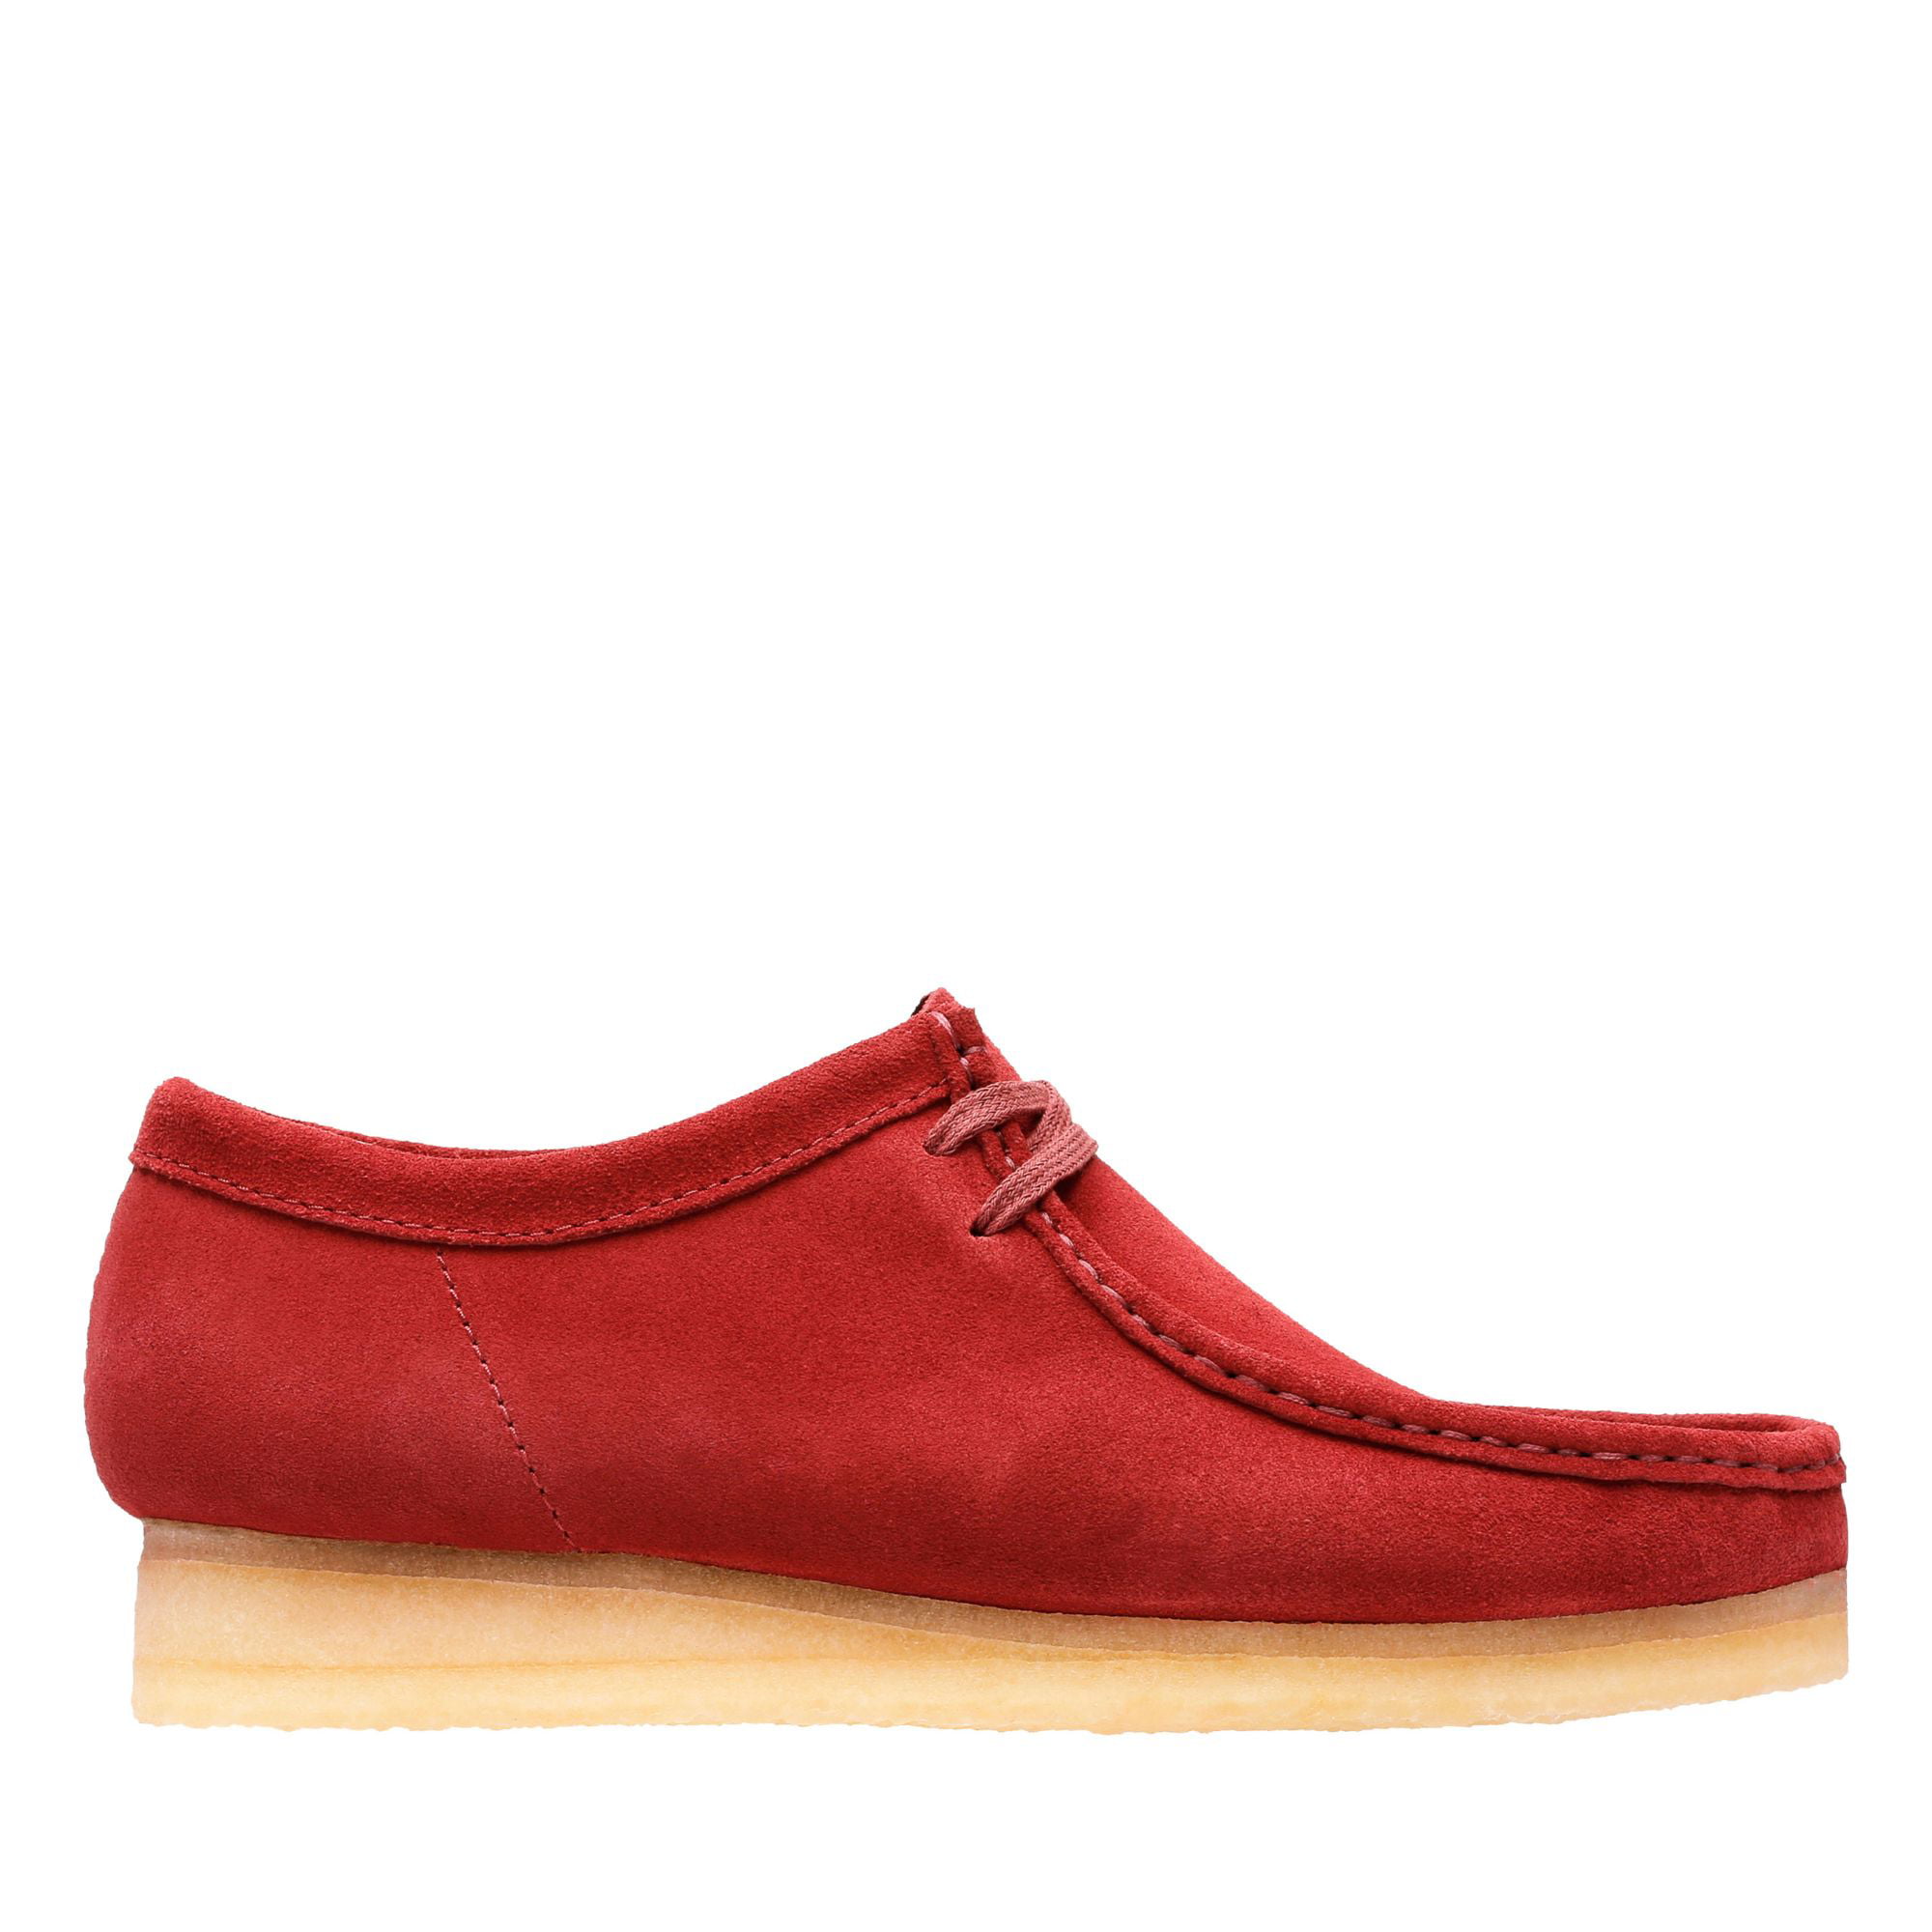 Clarks Originals Wallabee Men's Shoes Red Suede 26128365 - Walmart.com